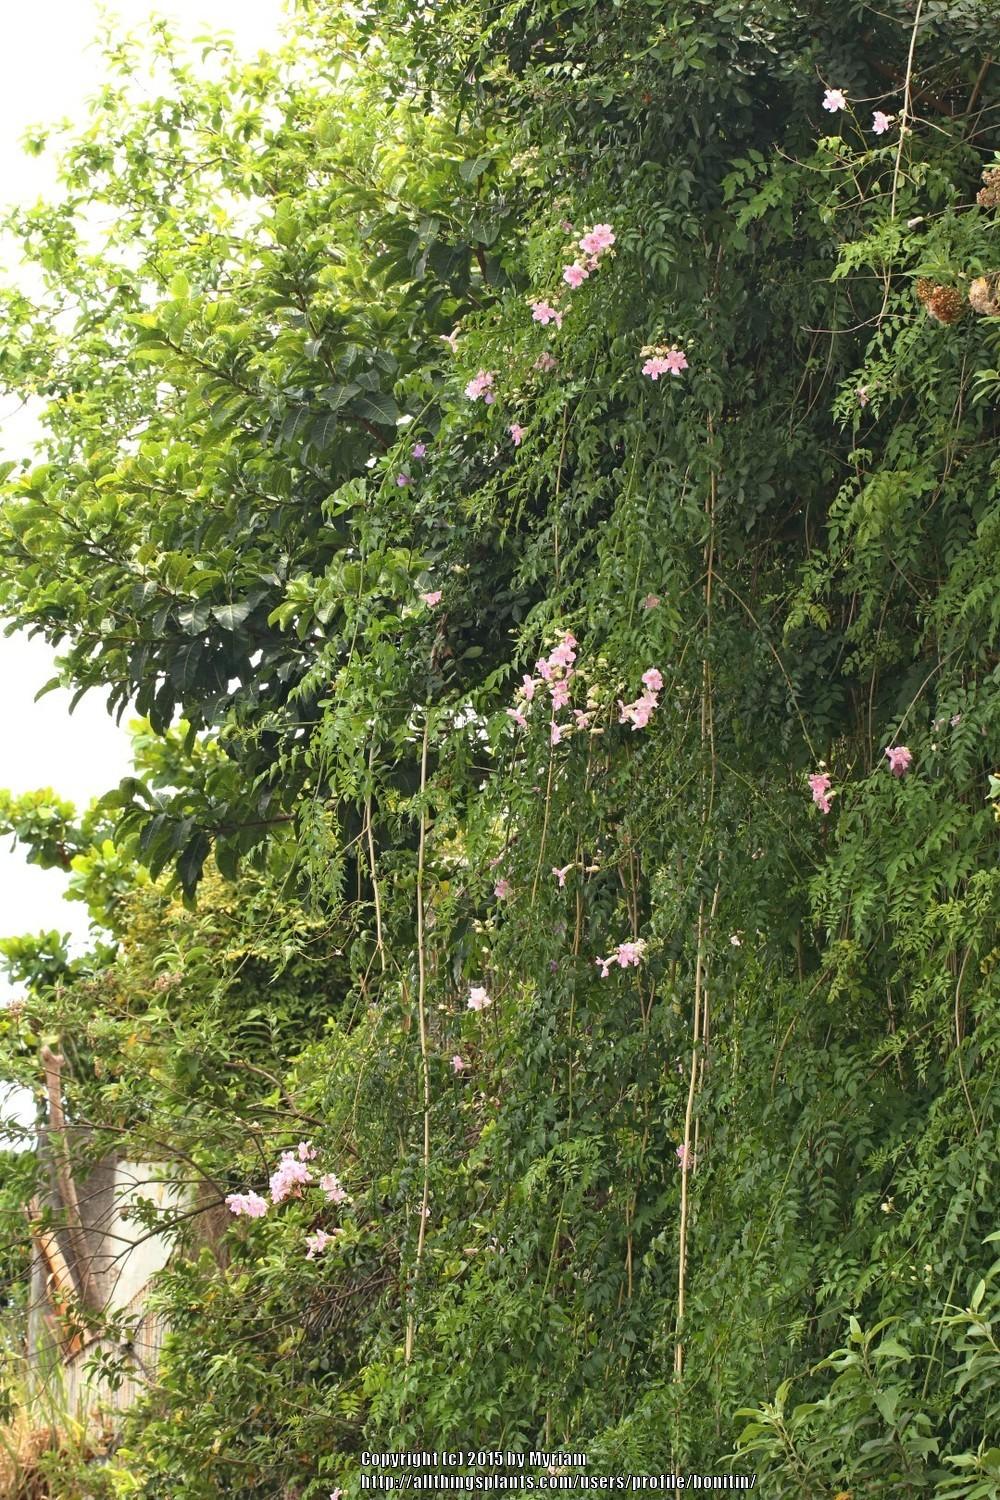 Photo of Pink Trumpet Vine (Podranea ricasoliana) uploaded by bonitin